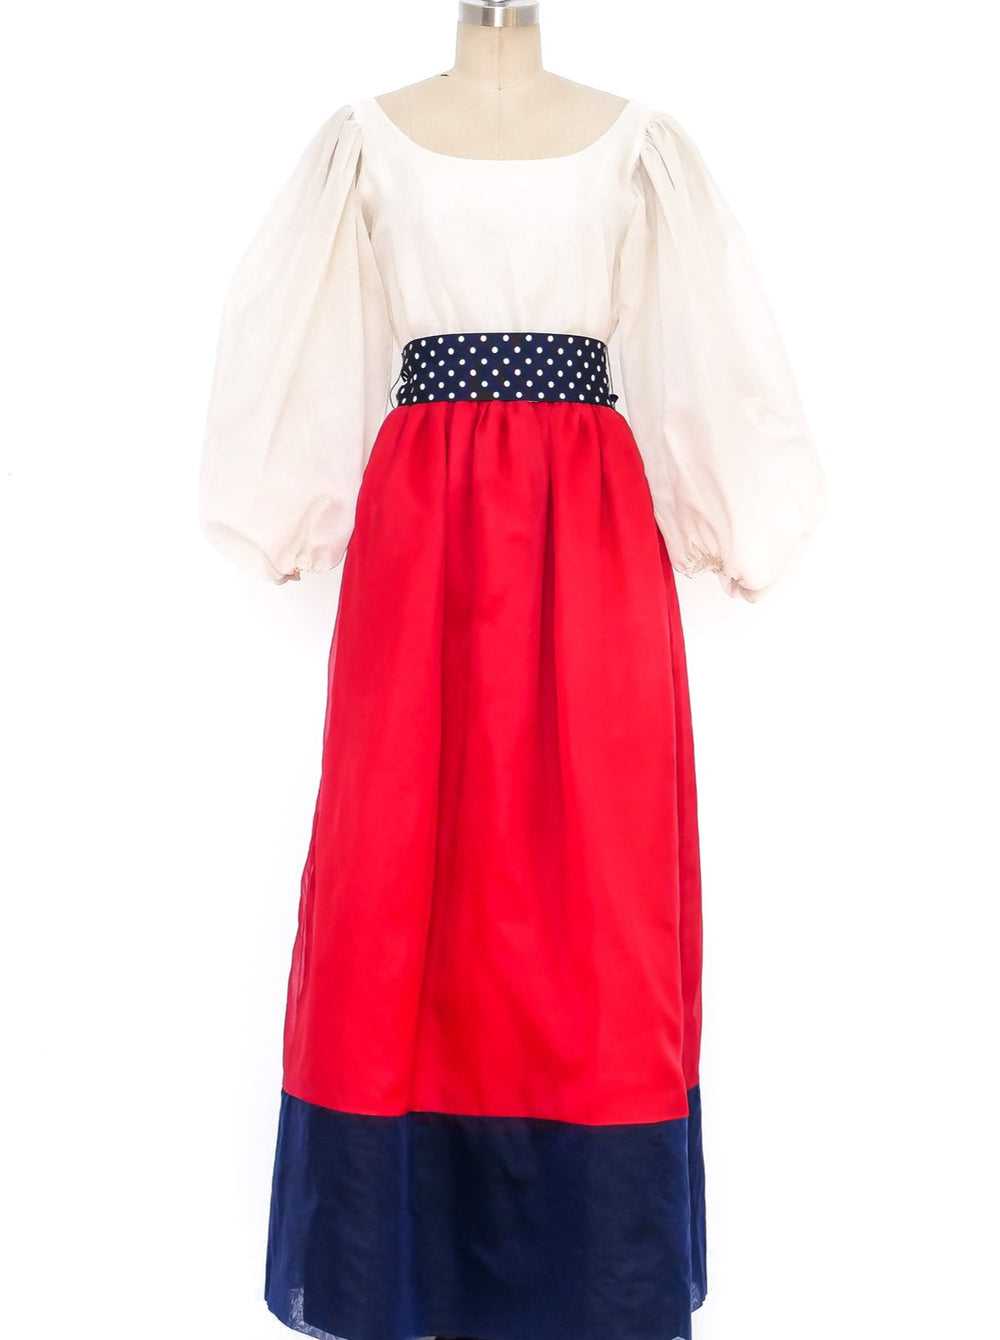 Bill Blass Colorblock Taffeta Dress - image 1